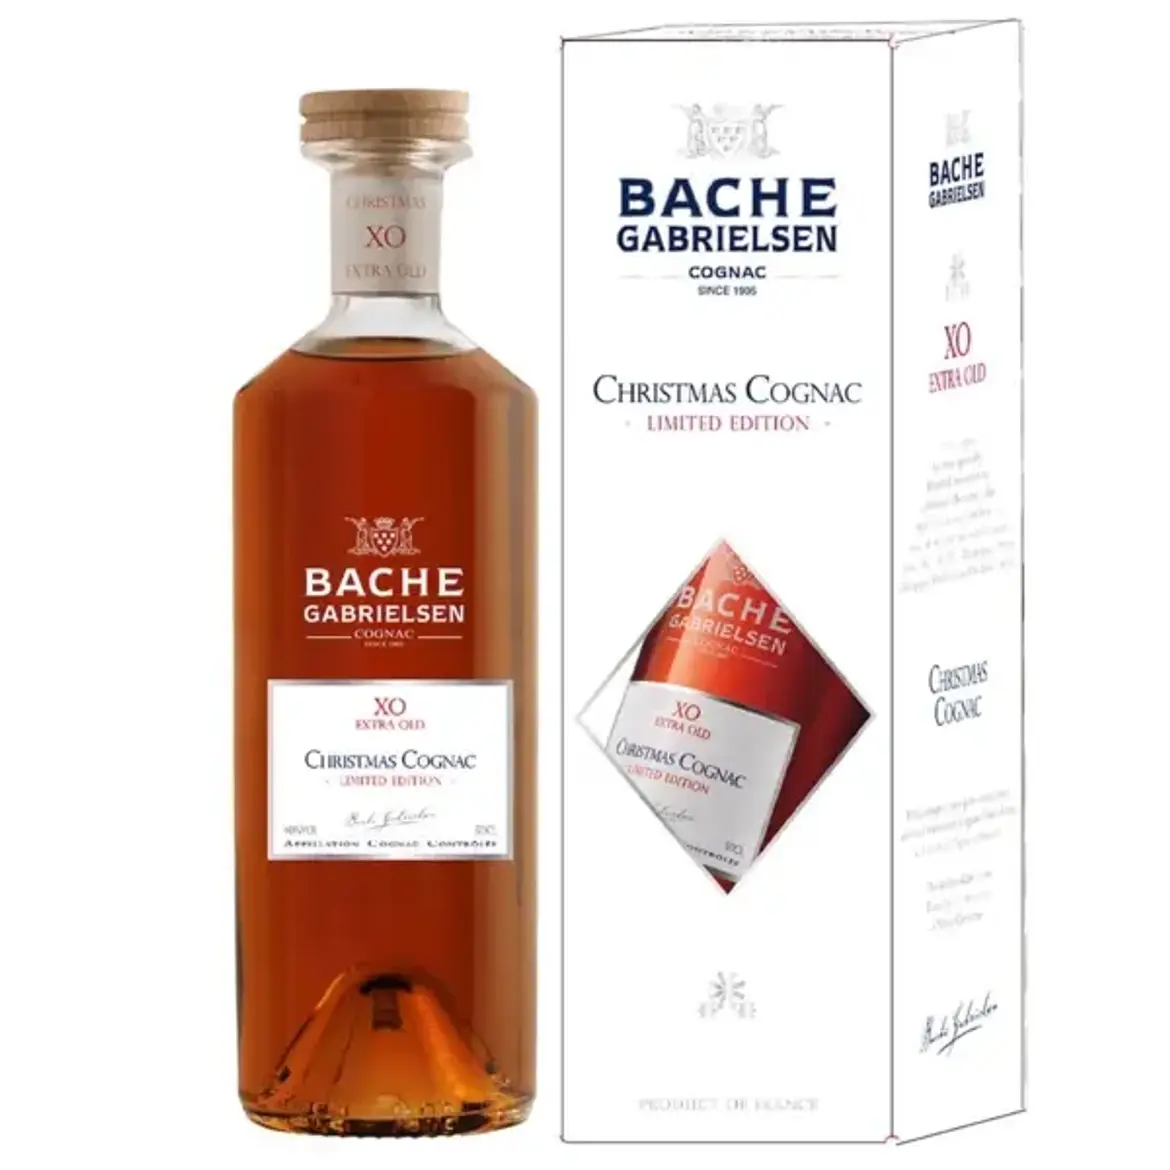 Bache Gabrielsen Christmas XO cognac 40%